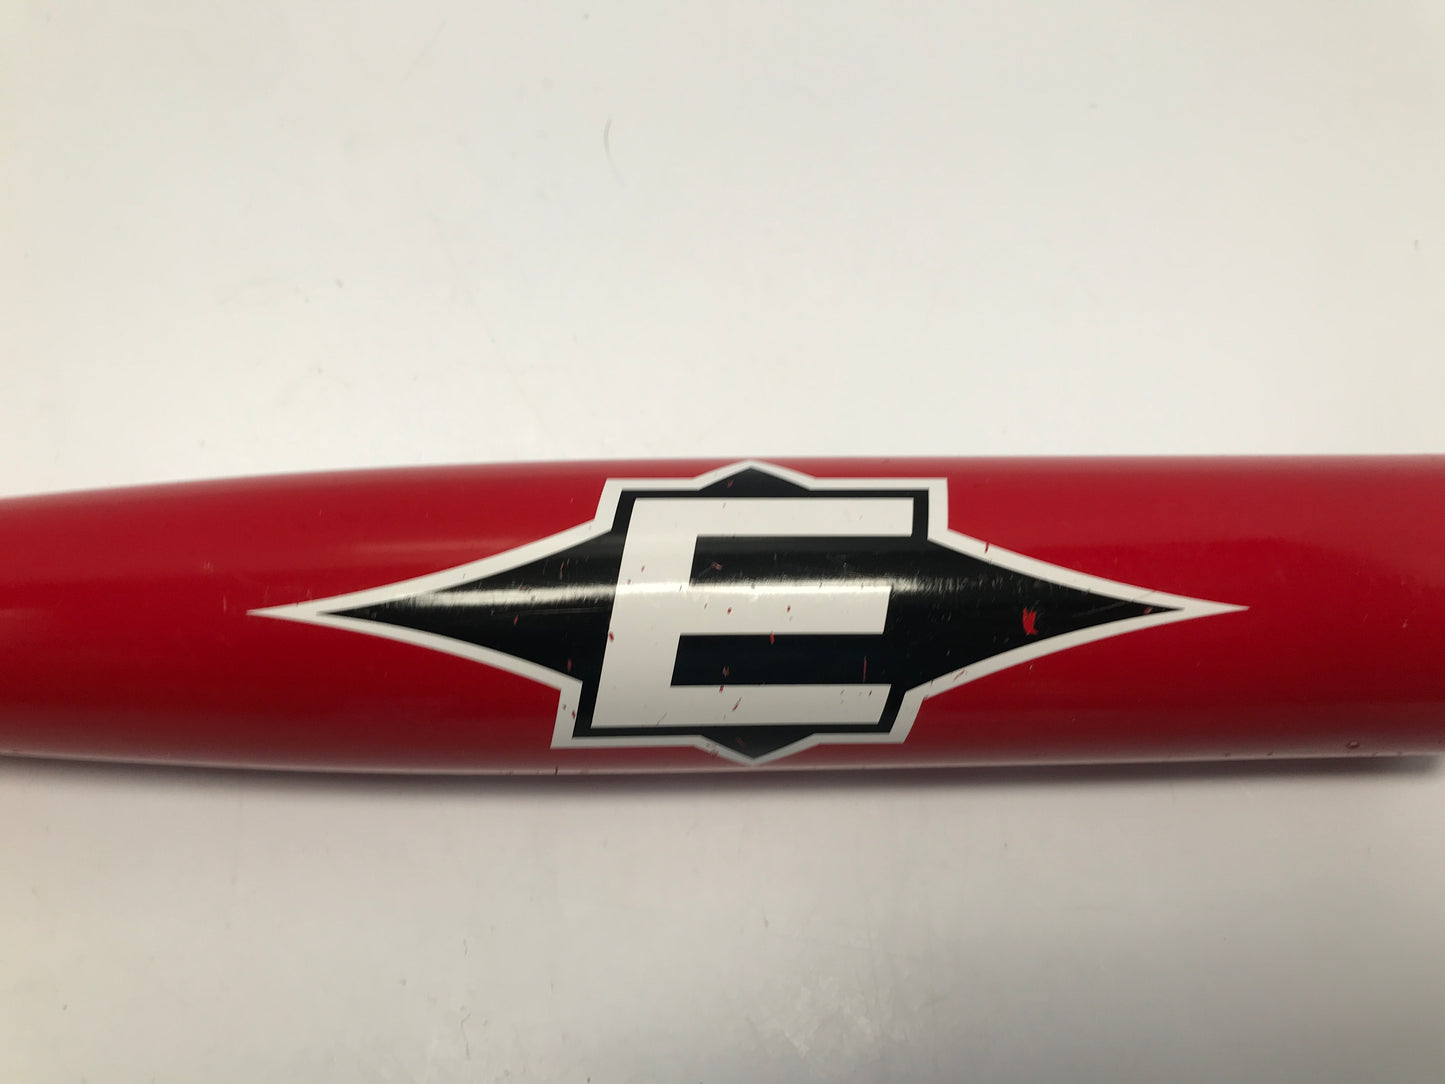 Baseball Bat 25 inch 15 oz Easton T Ball Red